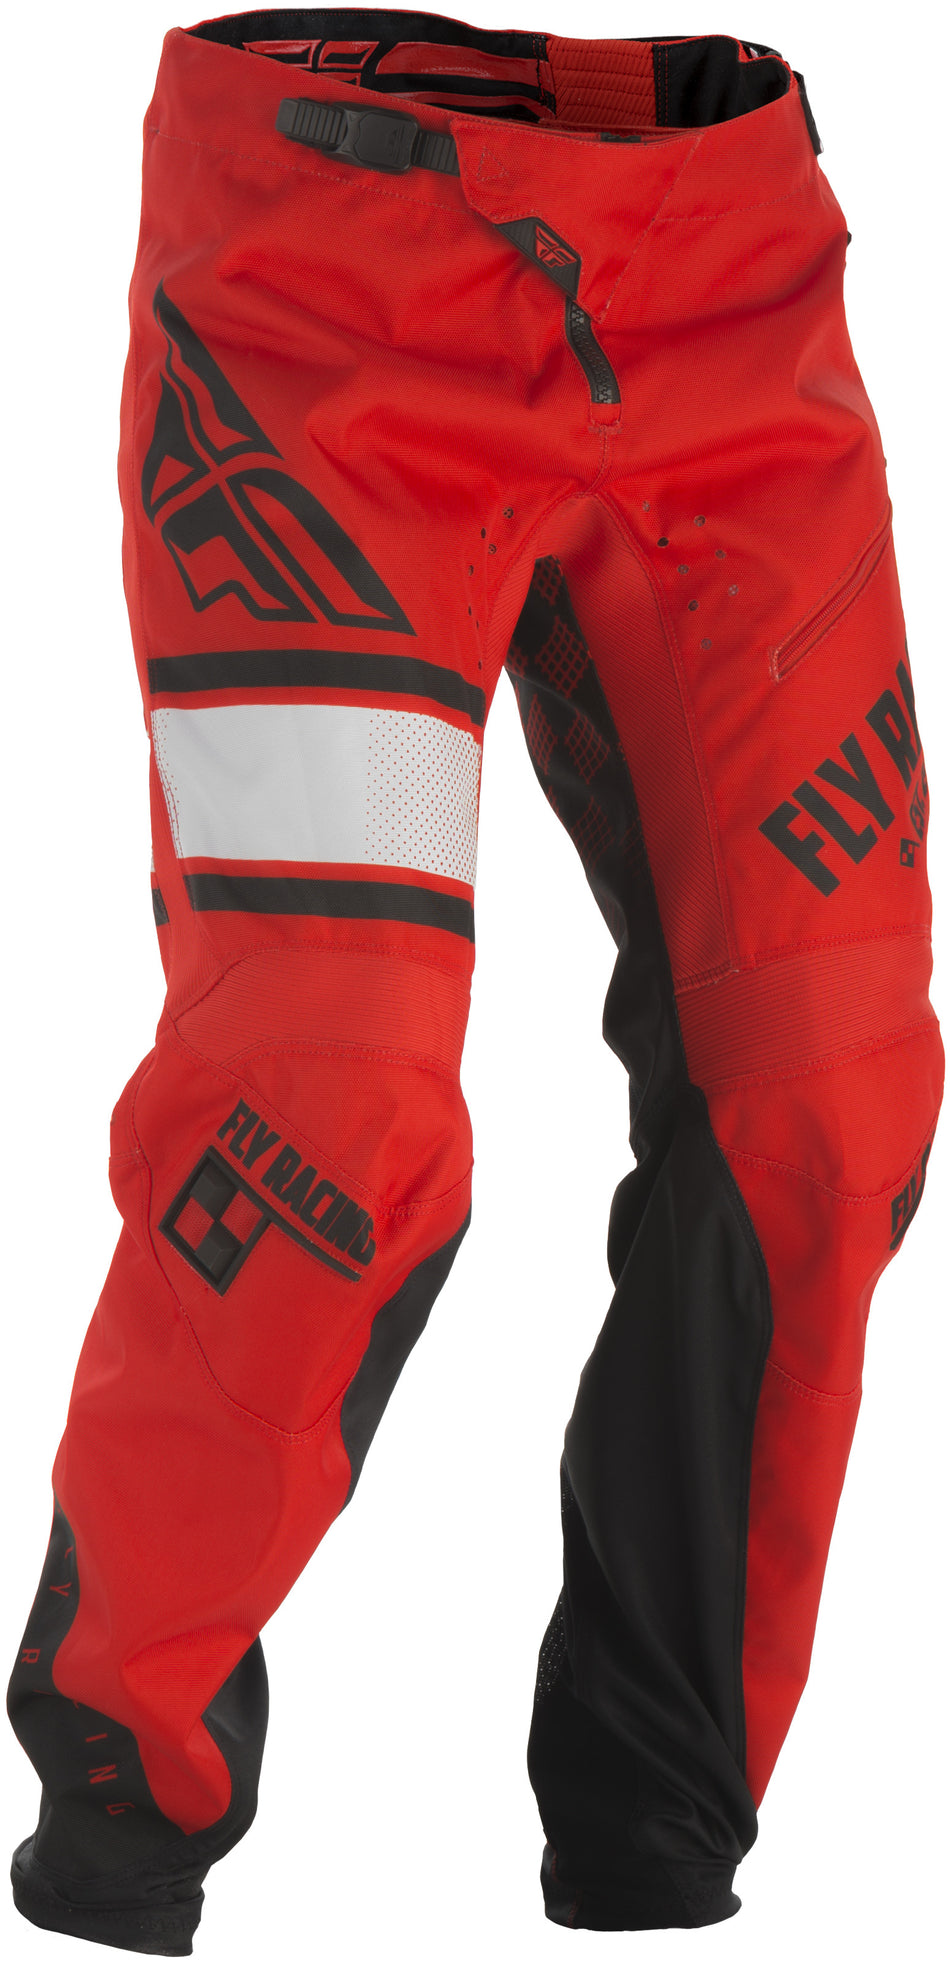 FLY RACING Kinetic Era Bicycle Pants Red/Black Sz 26 371-02226